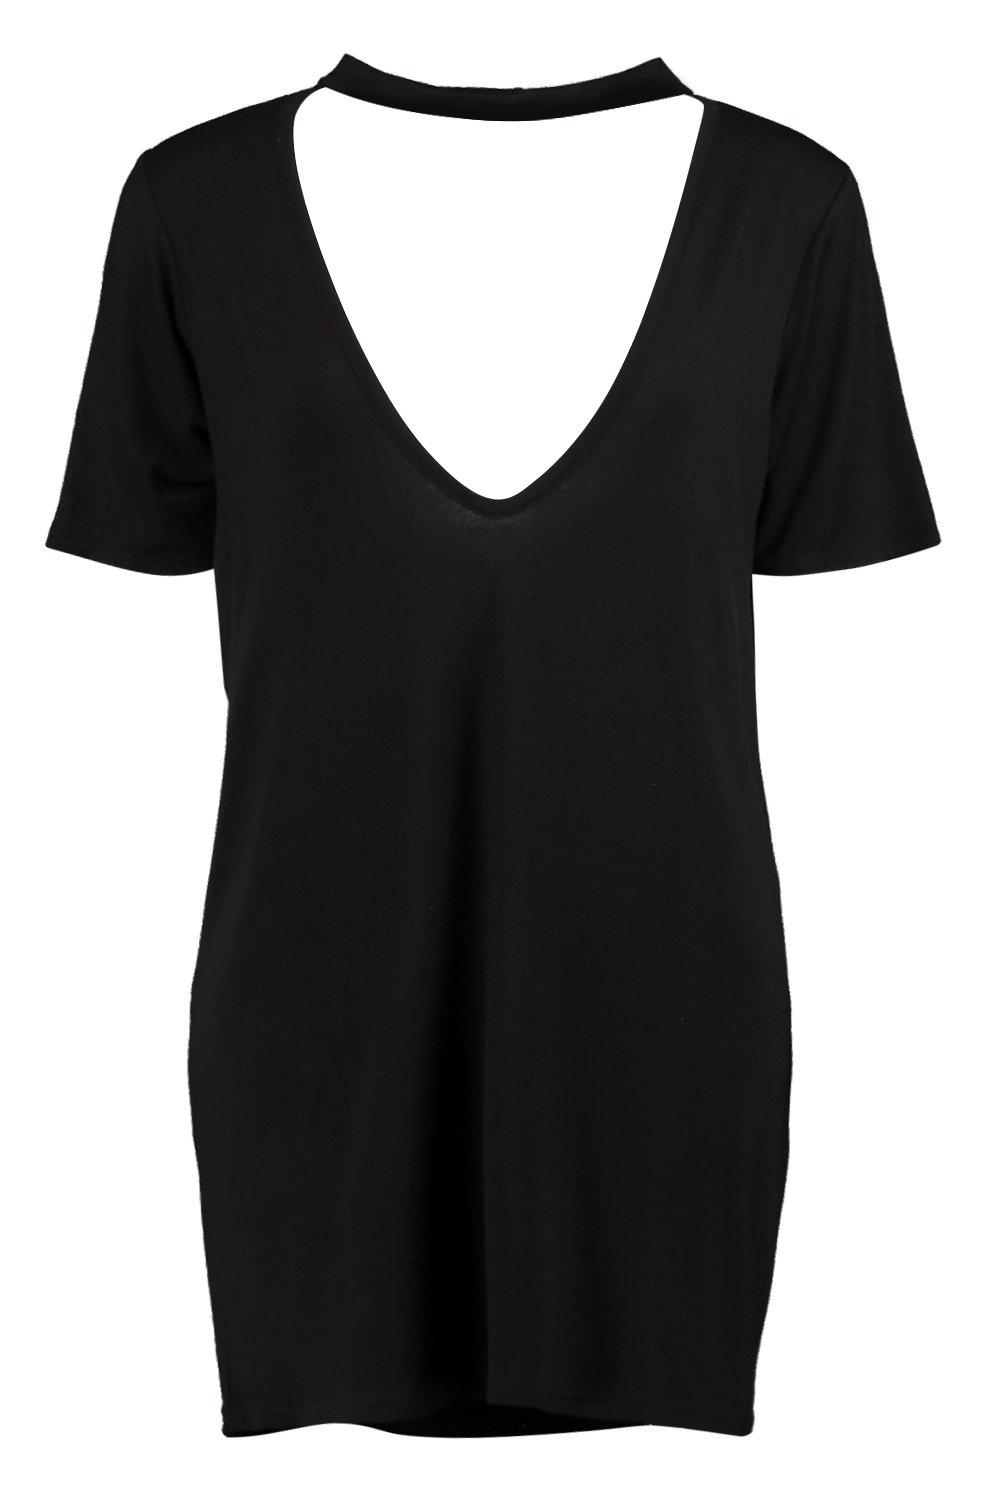 Basic Black Plunge V Neck T Shirt Dress